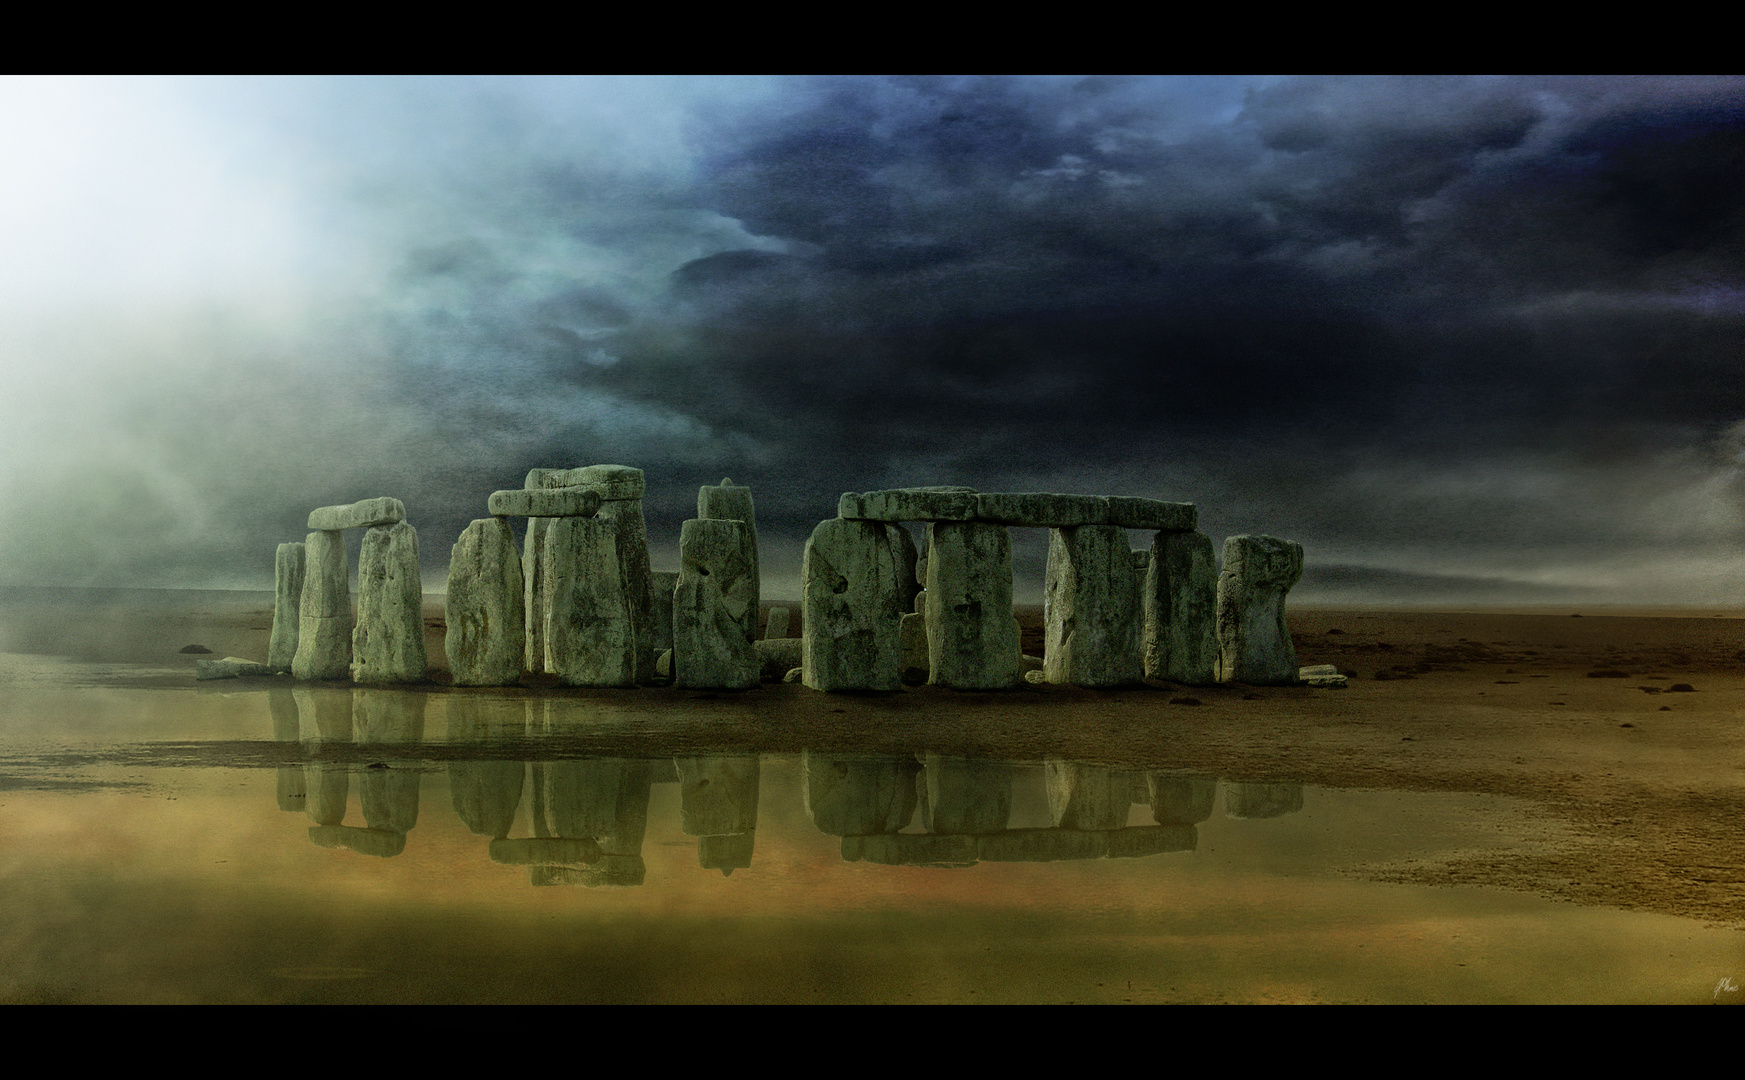 Stonehenge Apocalypse